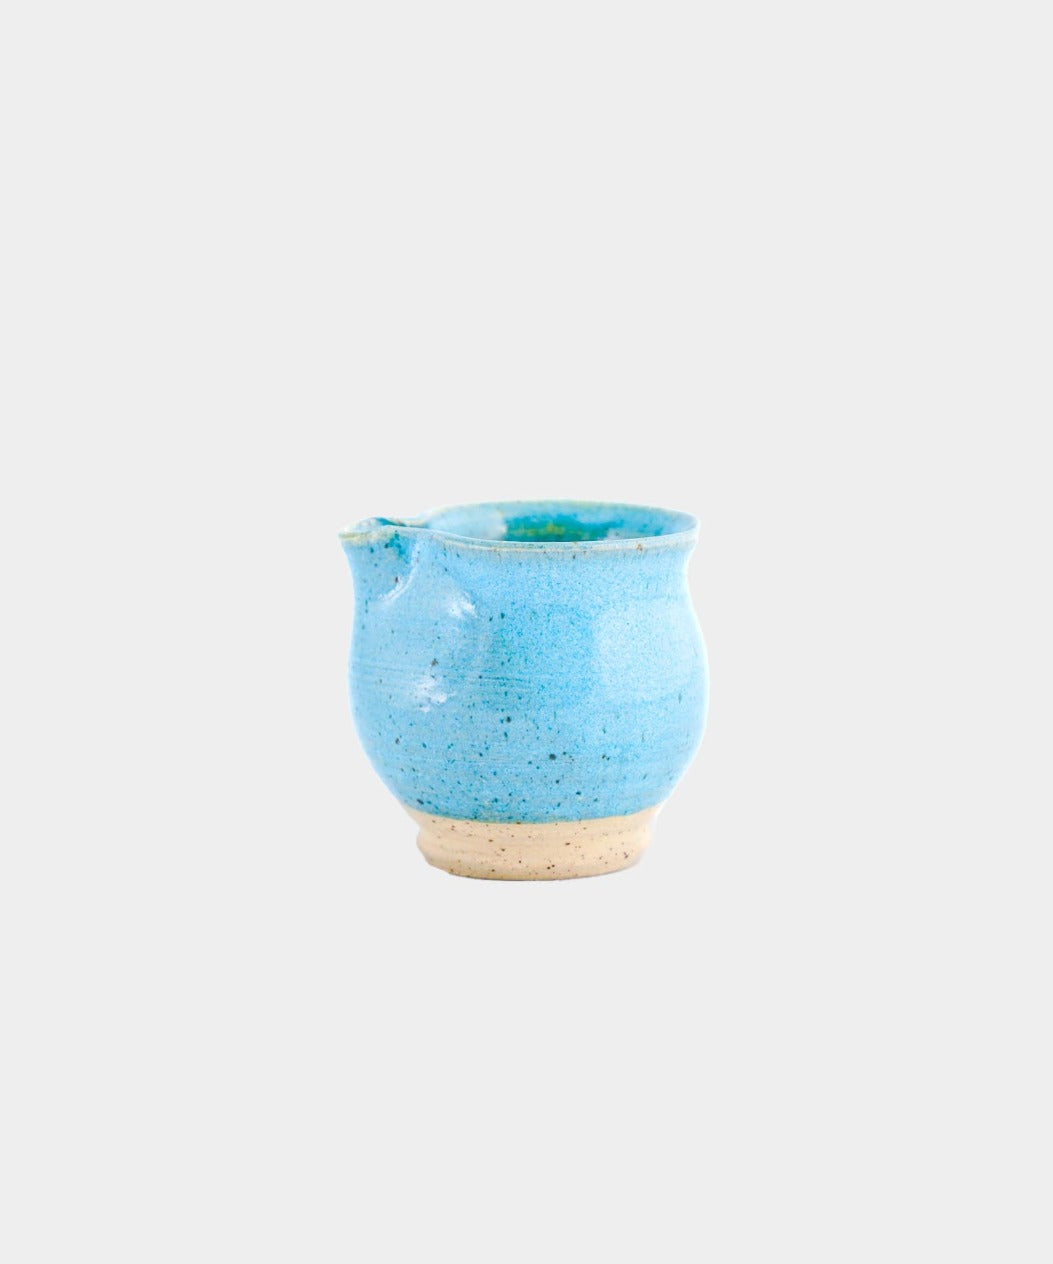 Håndlavet Keramik Flødekande | SKY by Vang | Kerama